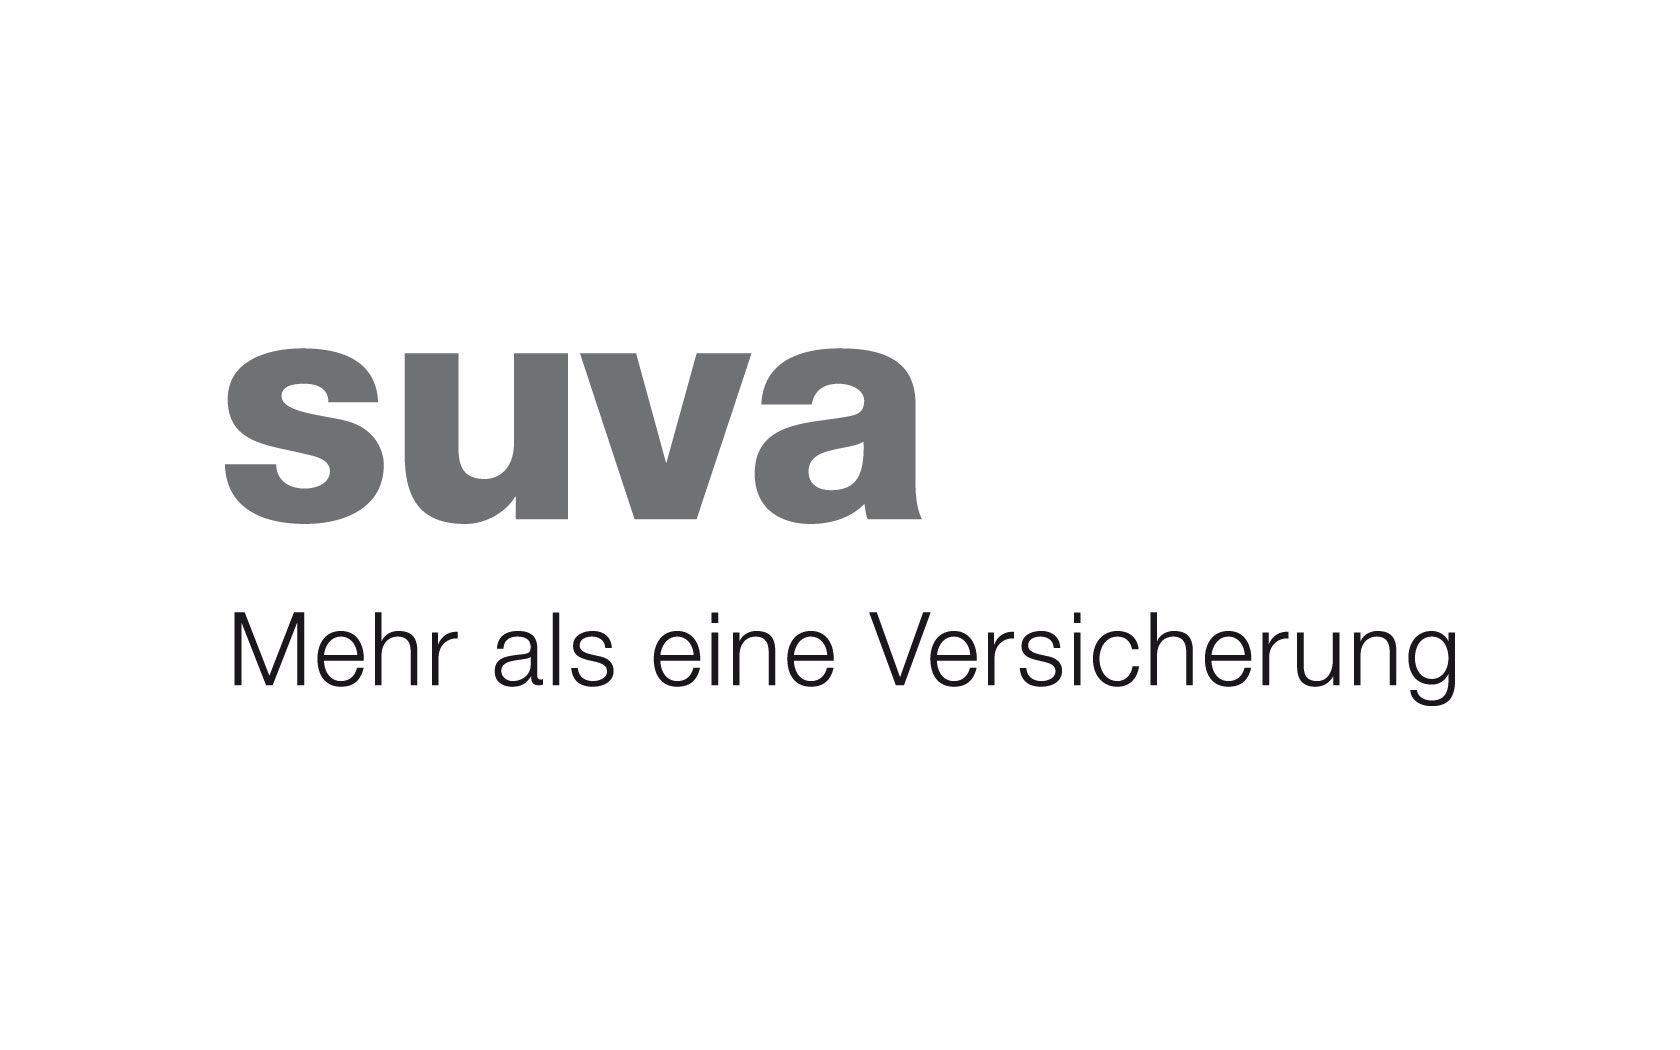 Swiss Insurance Company Logo - Suva – More than an insurance company - European Business Network